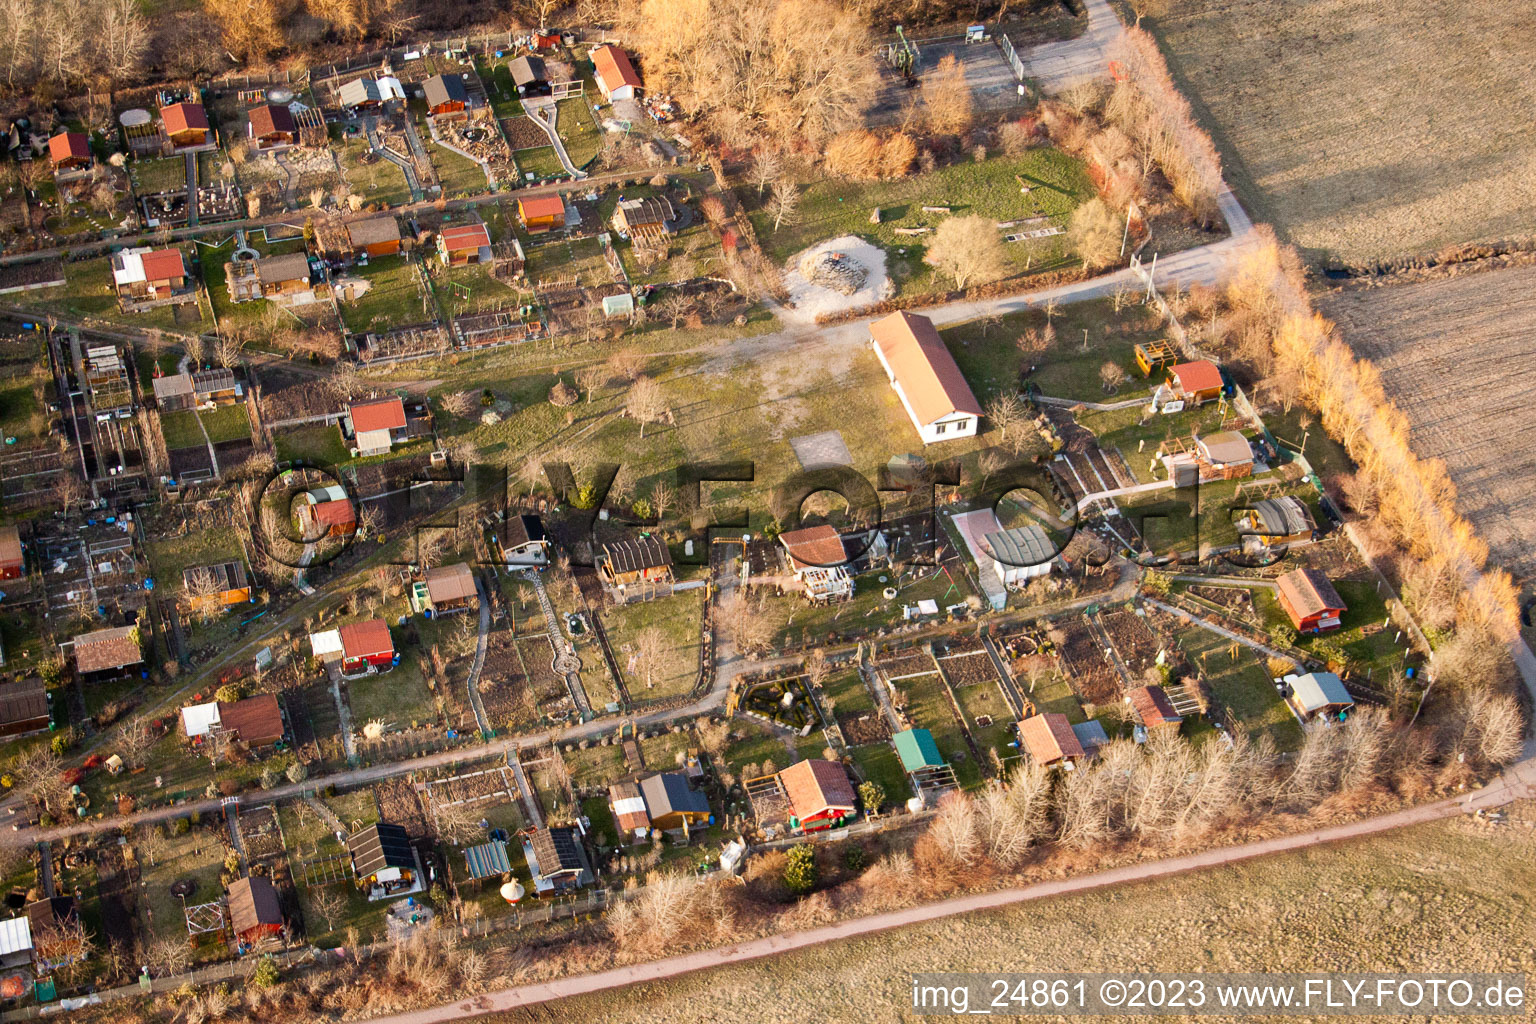 Aerial view of Allotment garden area in the district Dammheim in Landau in der Pfalz in the state Rhineland-Palatinate, Germany